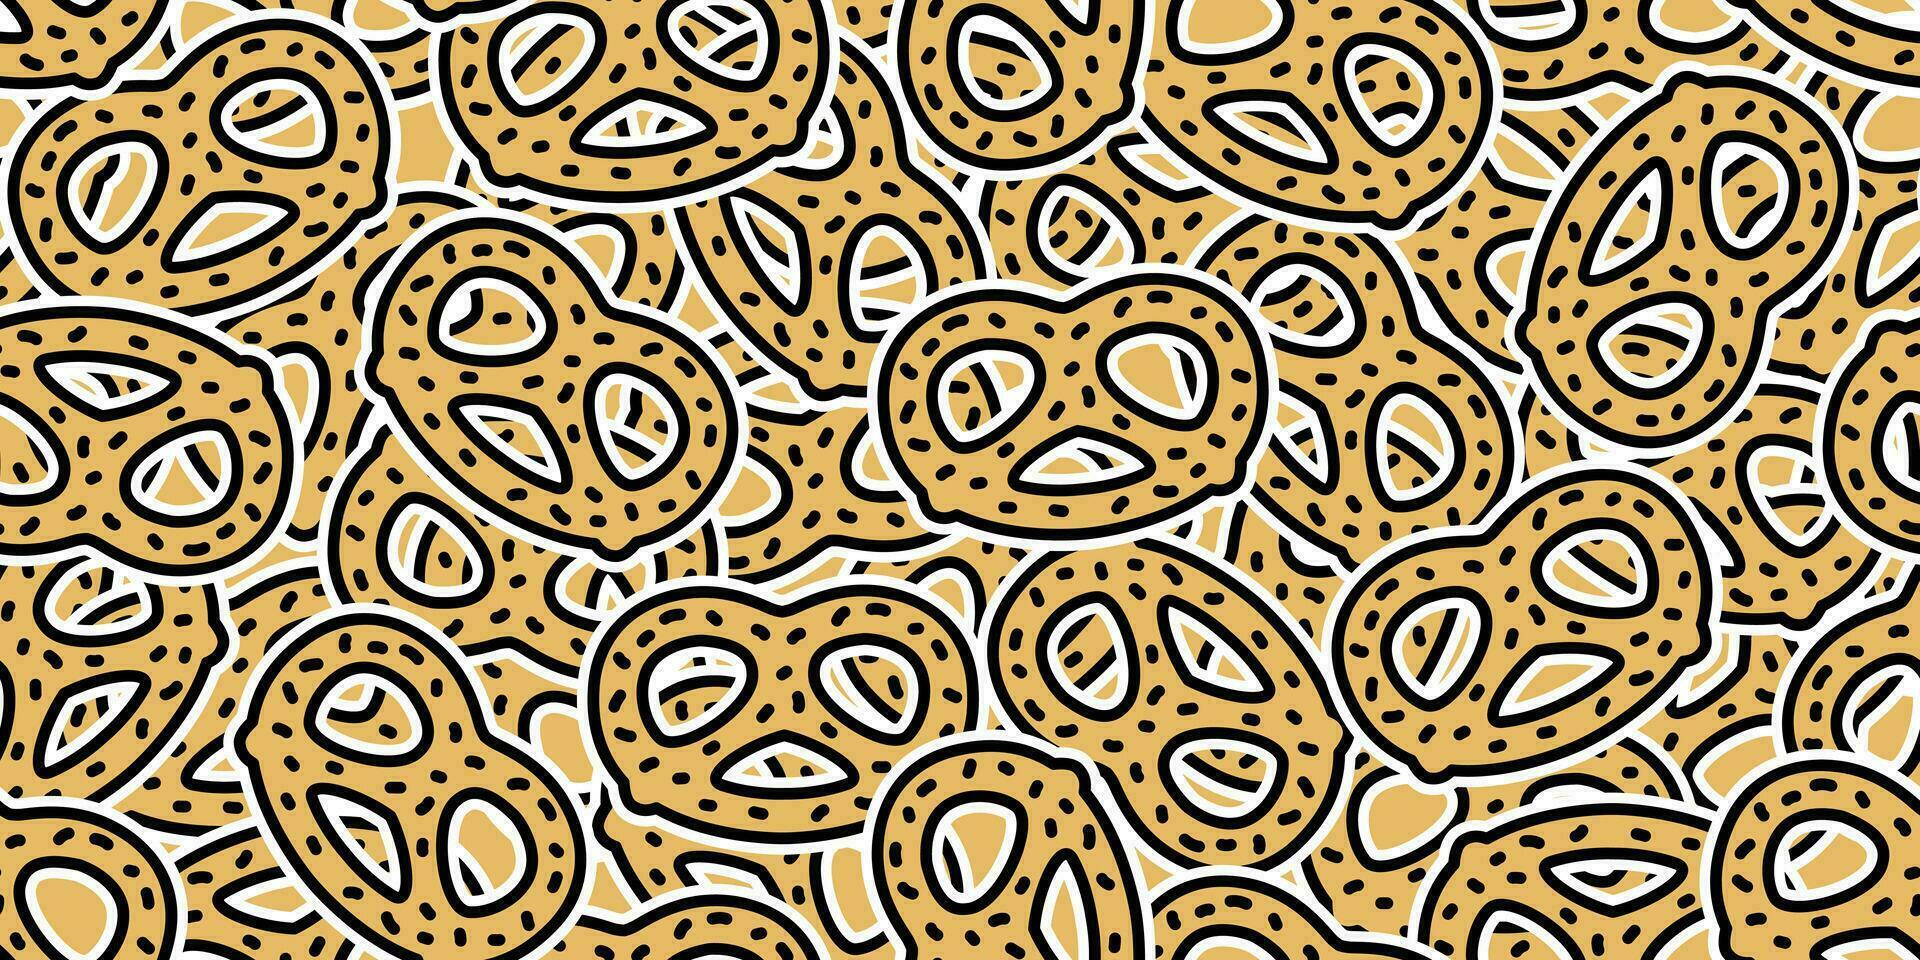 pretzel seamless pattern cookie vector snack bread scarf isolated wallpaper tile background cartoon doodle illustration design